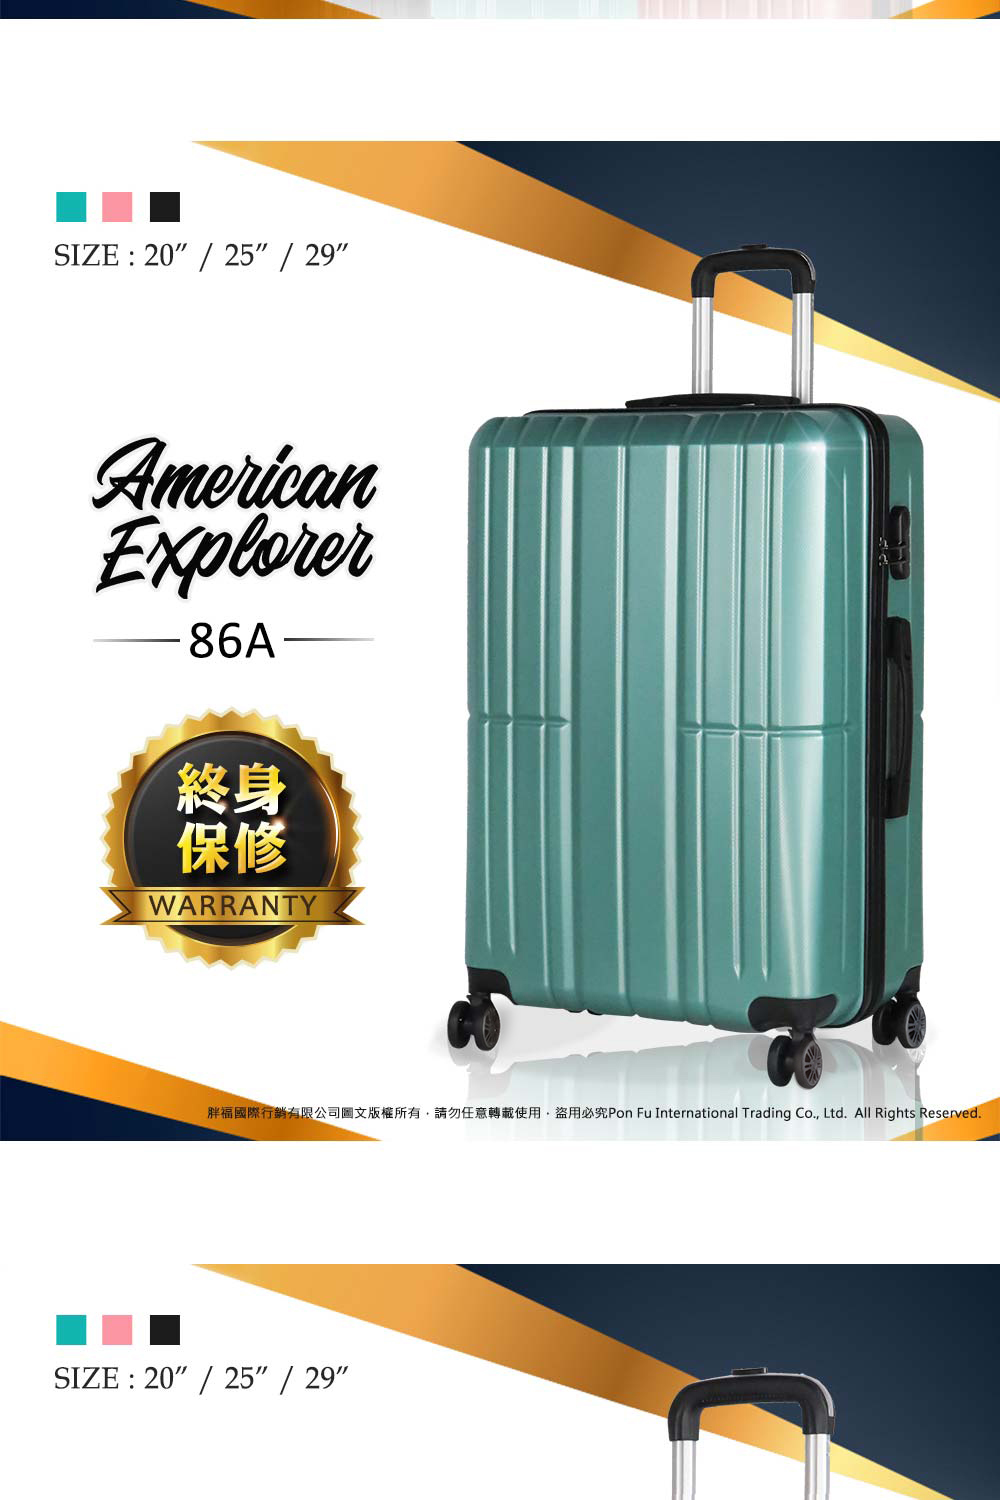 American Explorer 29吋 美國探險家 86A 旅行箱特惠 終身保修 大容量 霧面 飛機靜音輪 行李箱